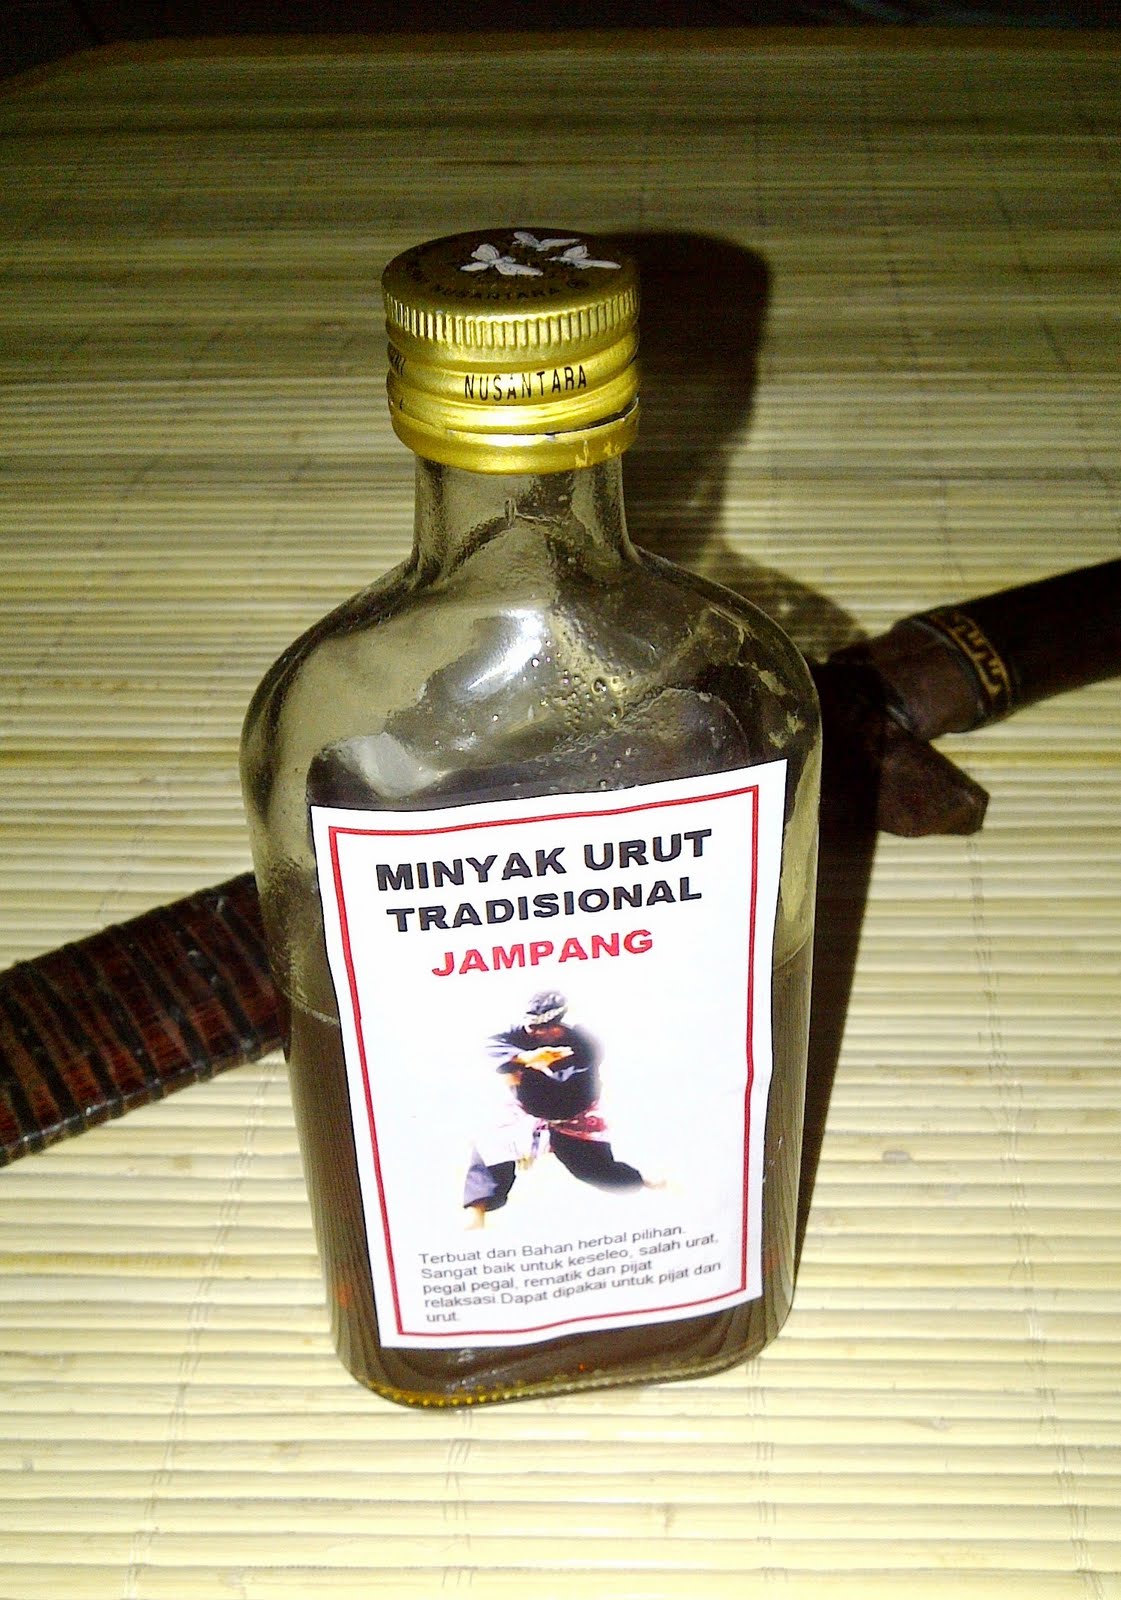 Minyak Urut Tradisional Jampang: January 2012